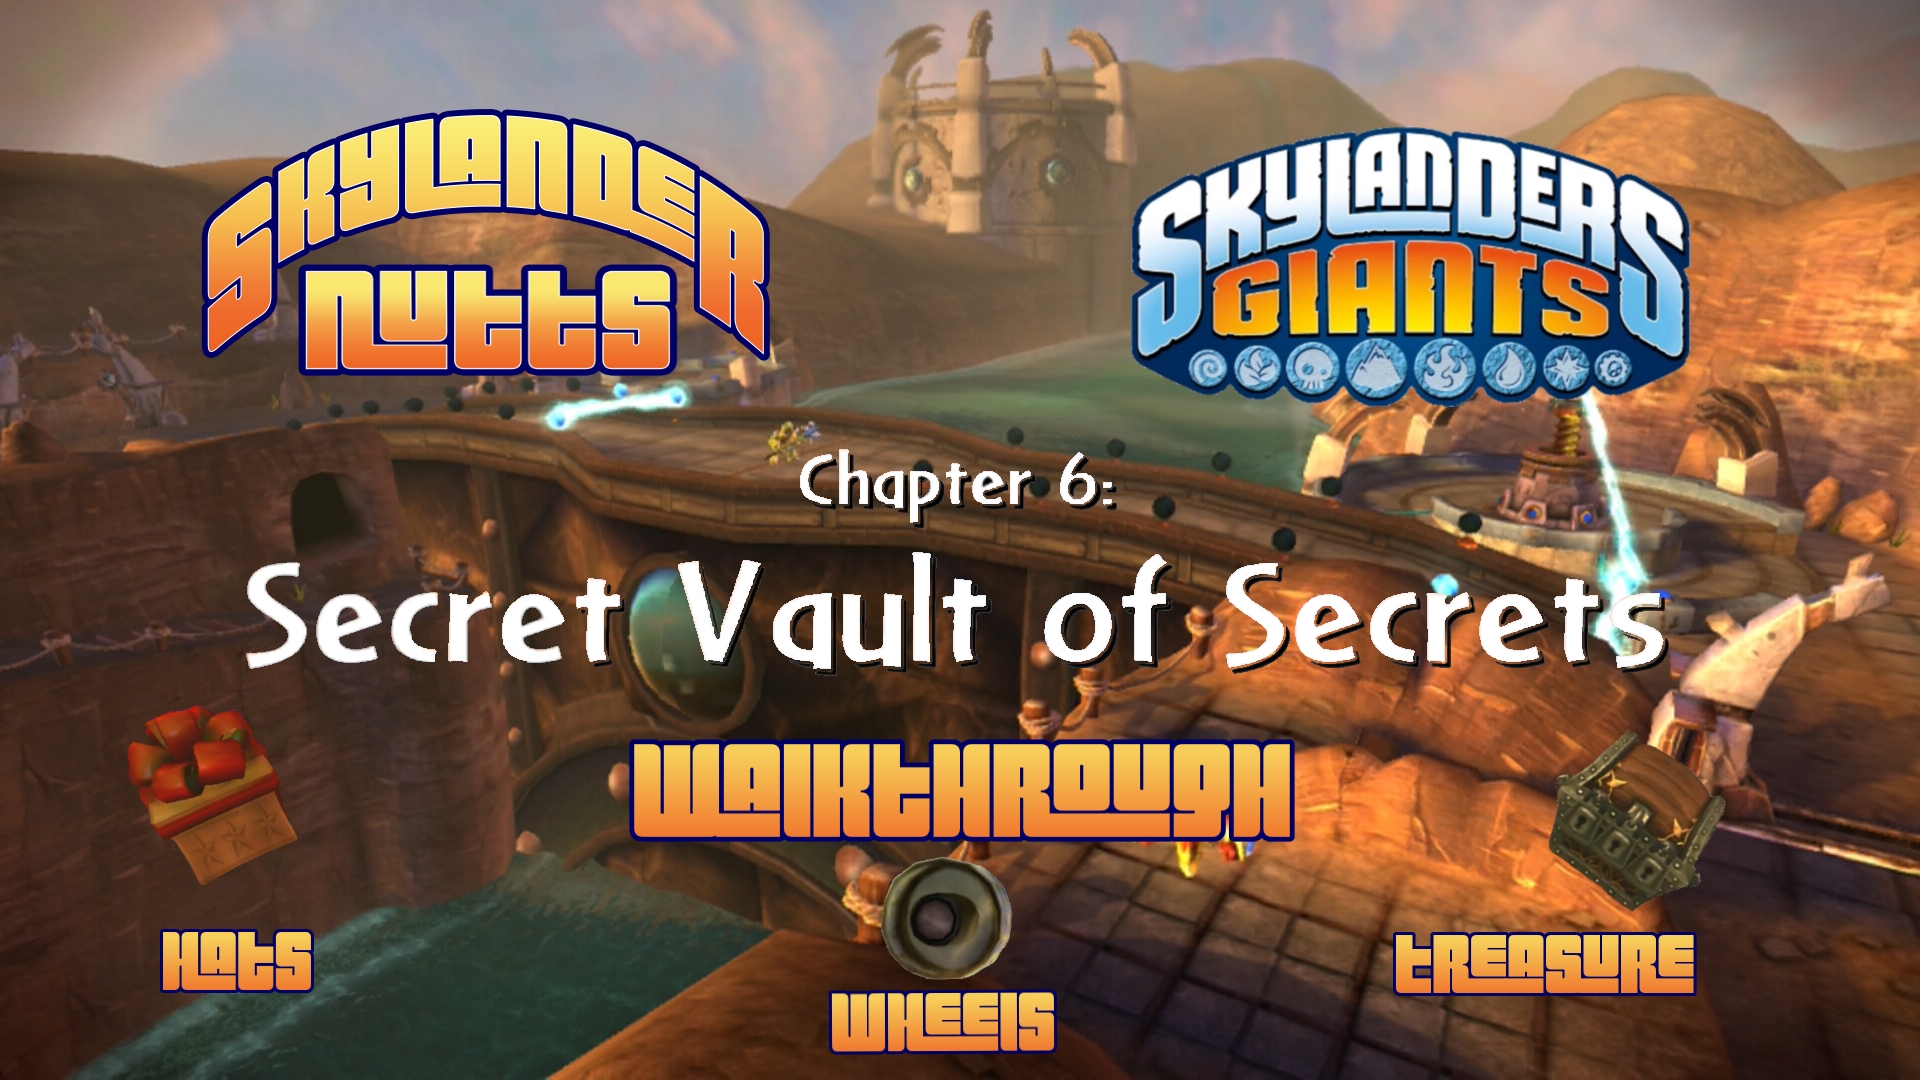 Giants Walkthrough (Ch 6 - Secret Vault of Secrets)